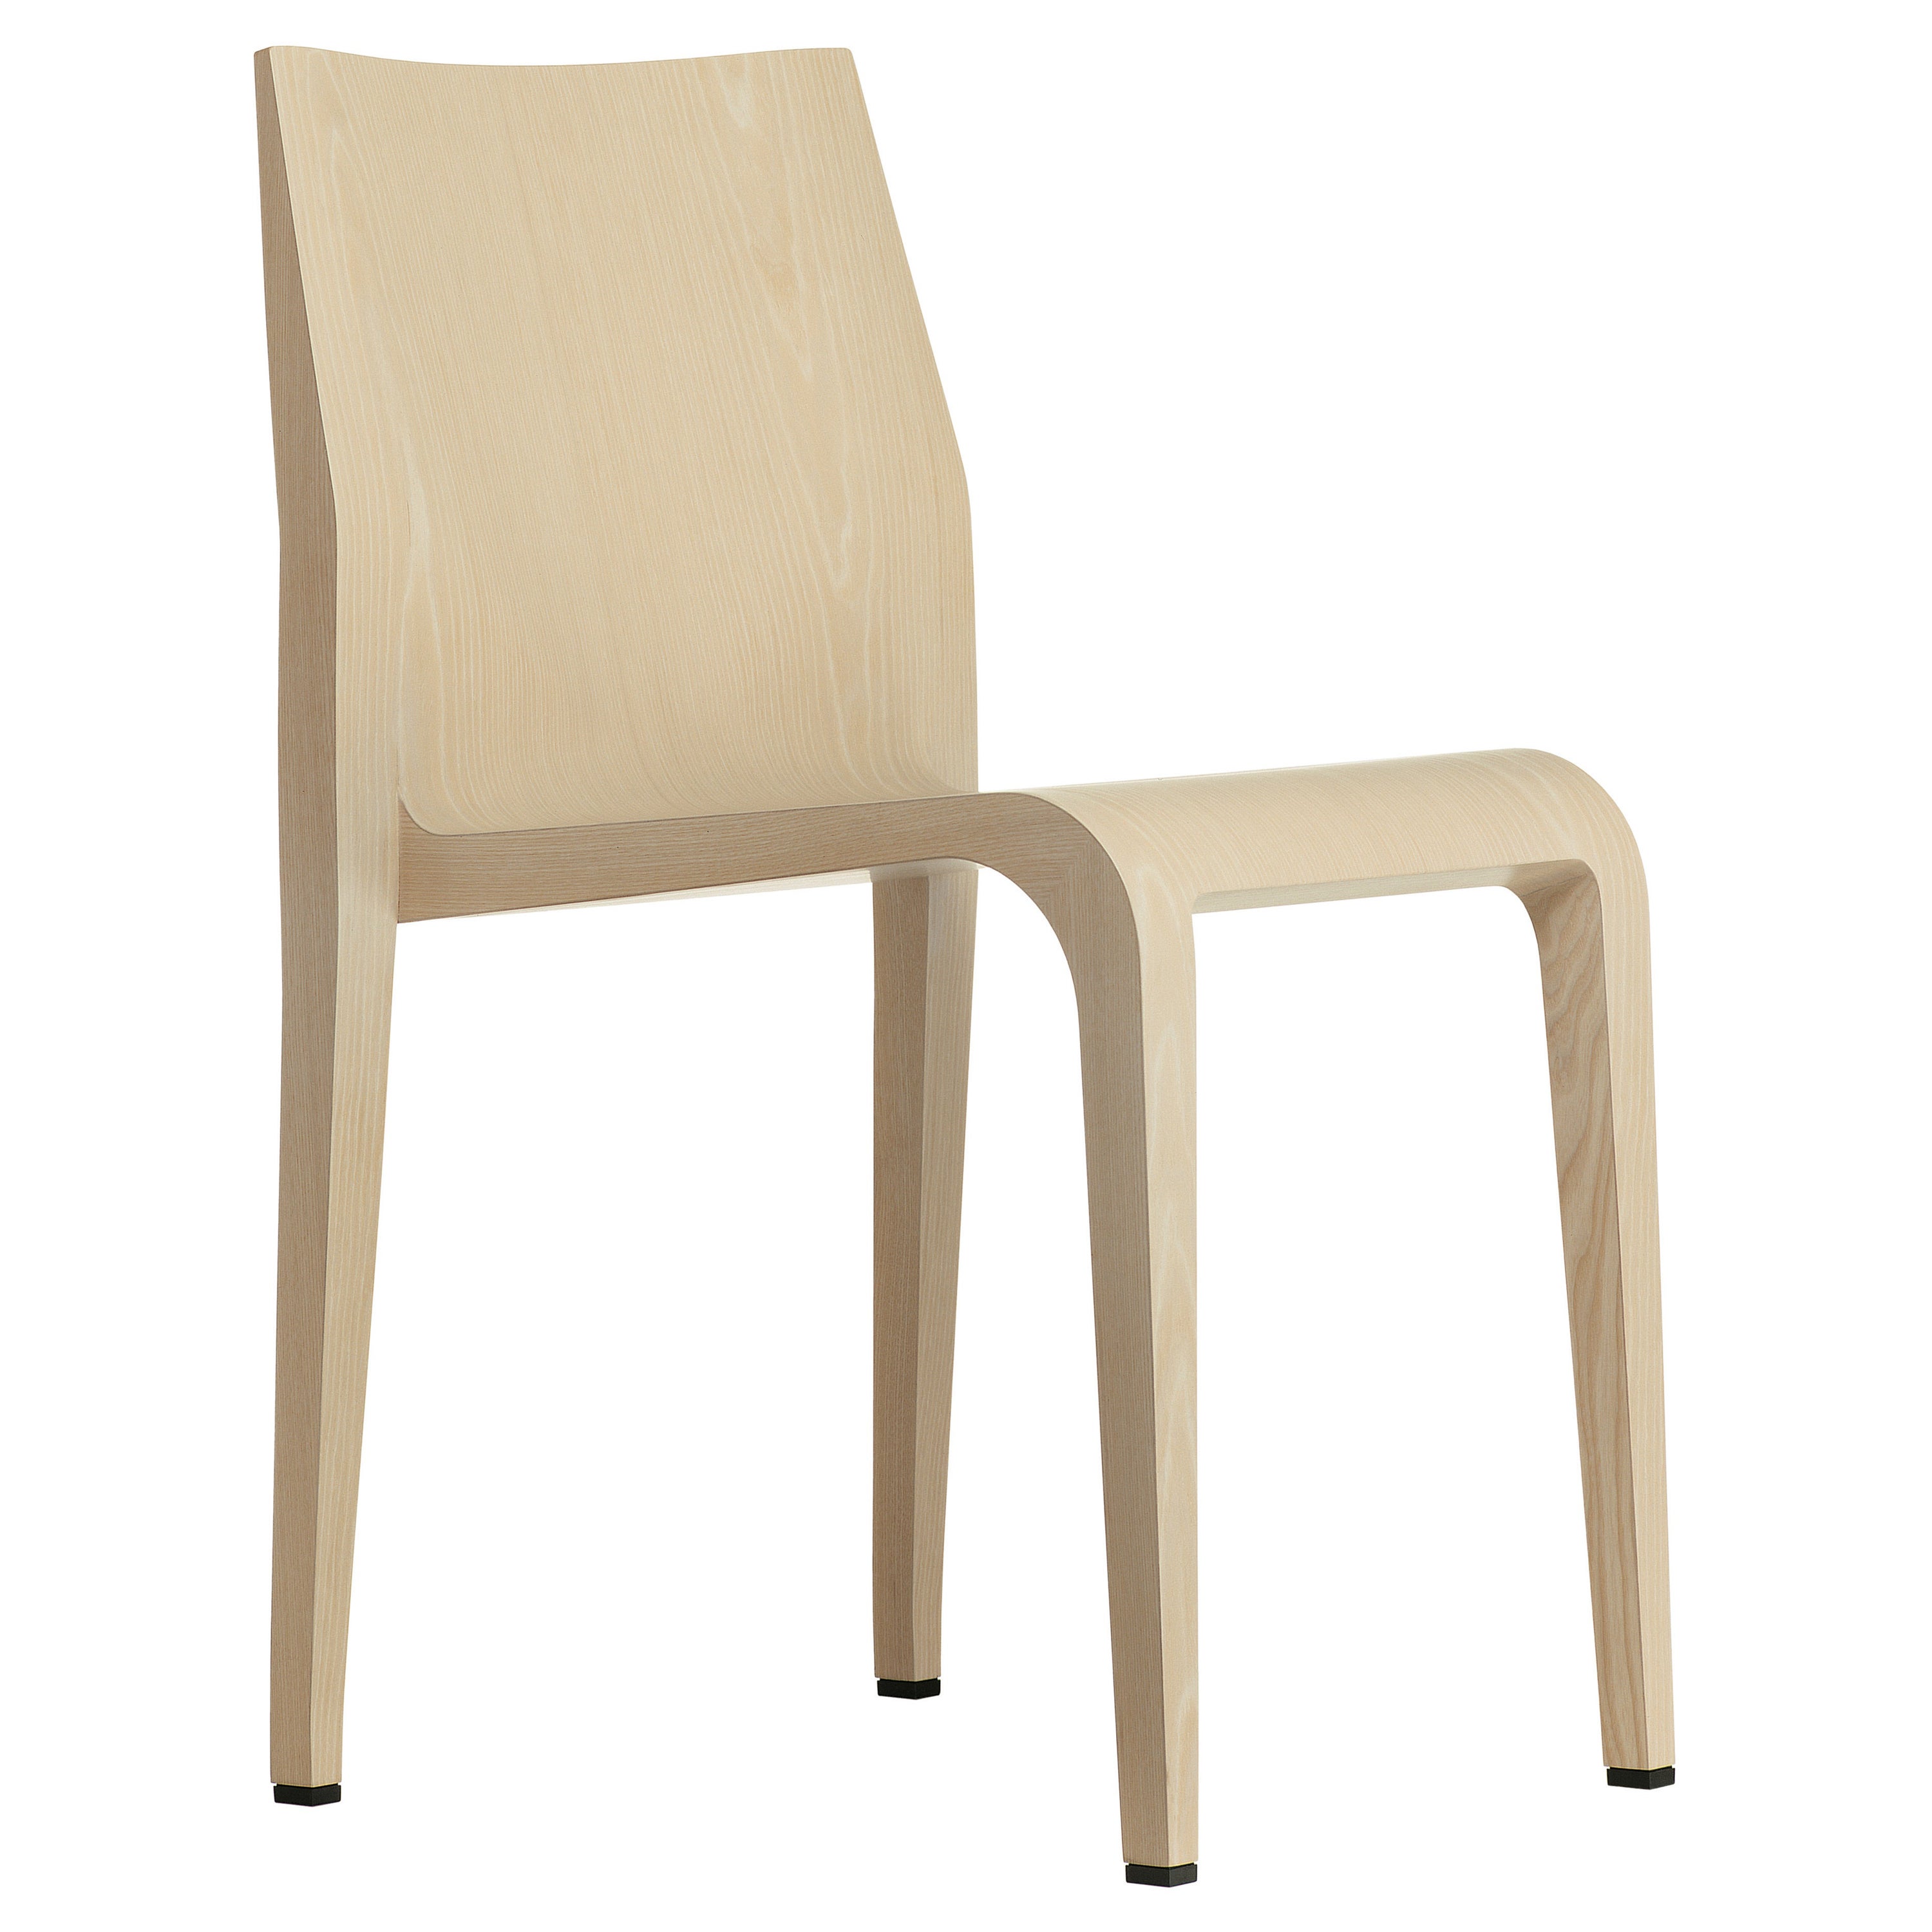 Alias 301 Laleggera Chair in Whitened Oak Wood by Riccardo Blumer For Sale